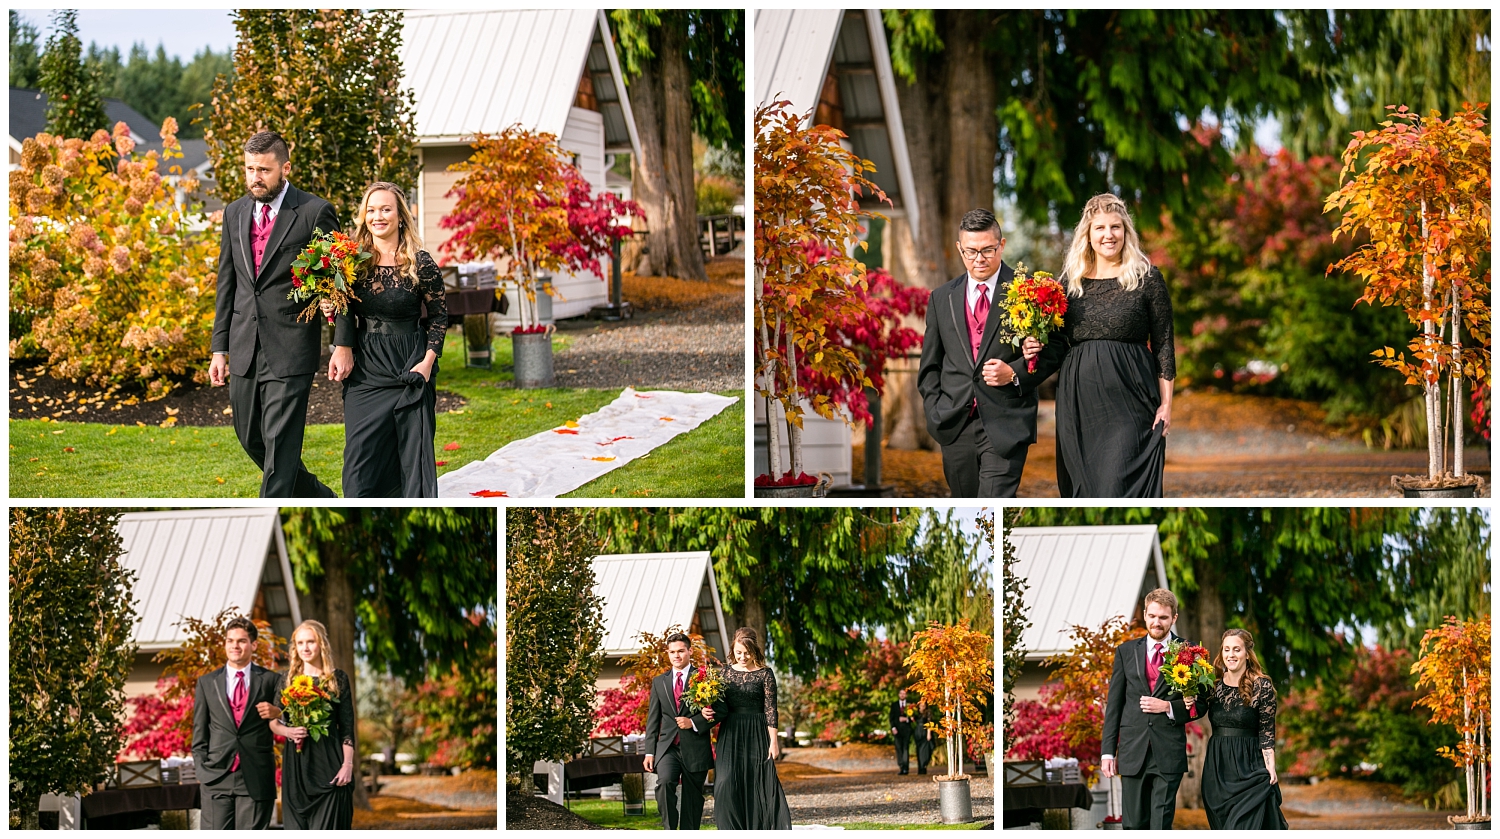 beginning of fall wedding ceremony at Filigree Farm in Buckley, Washington